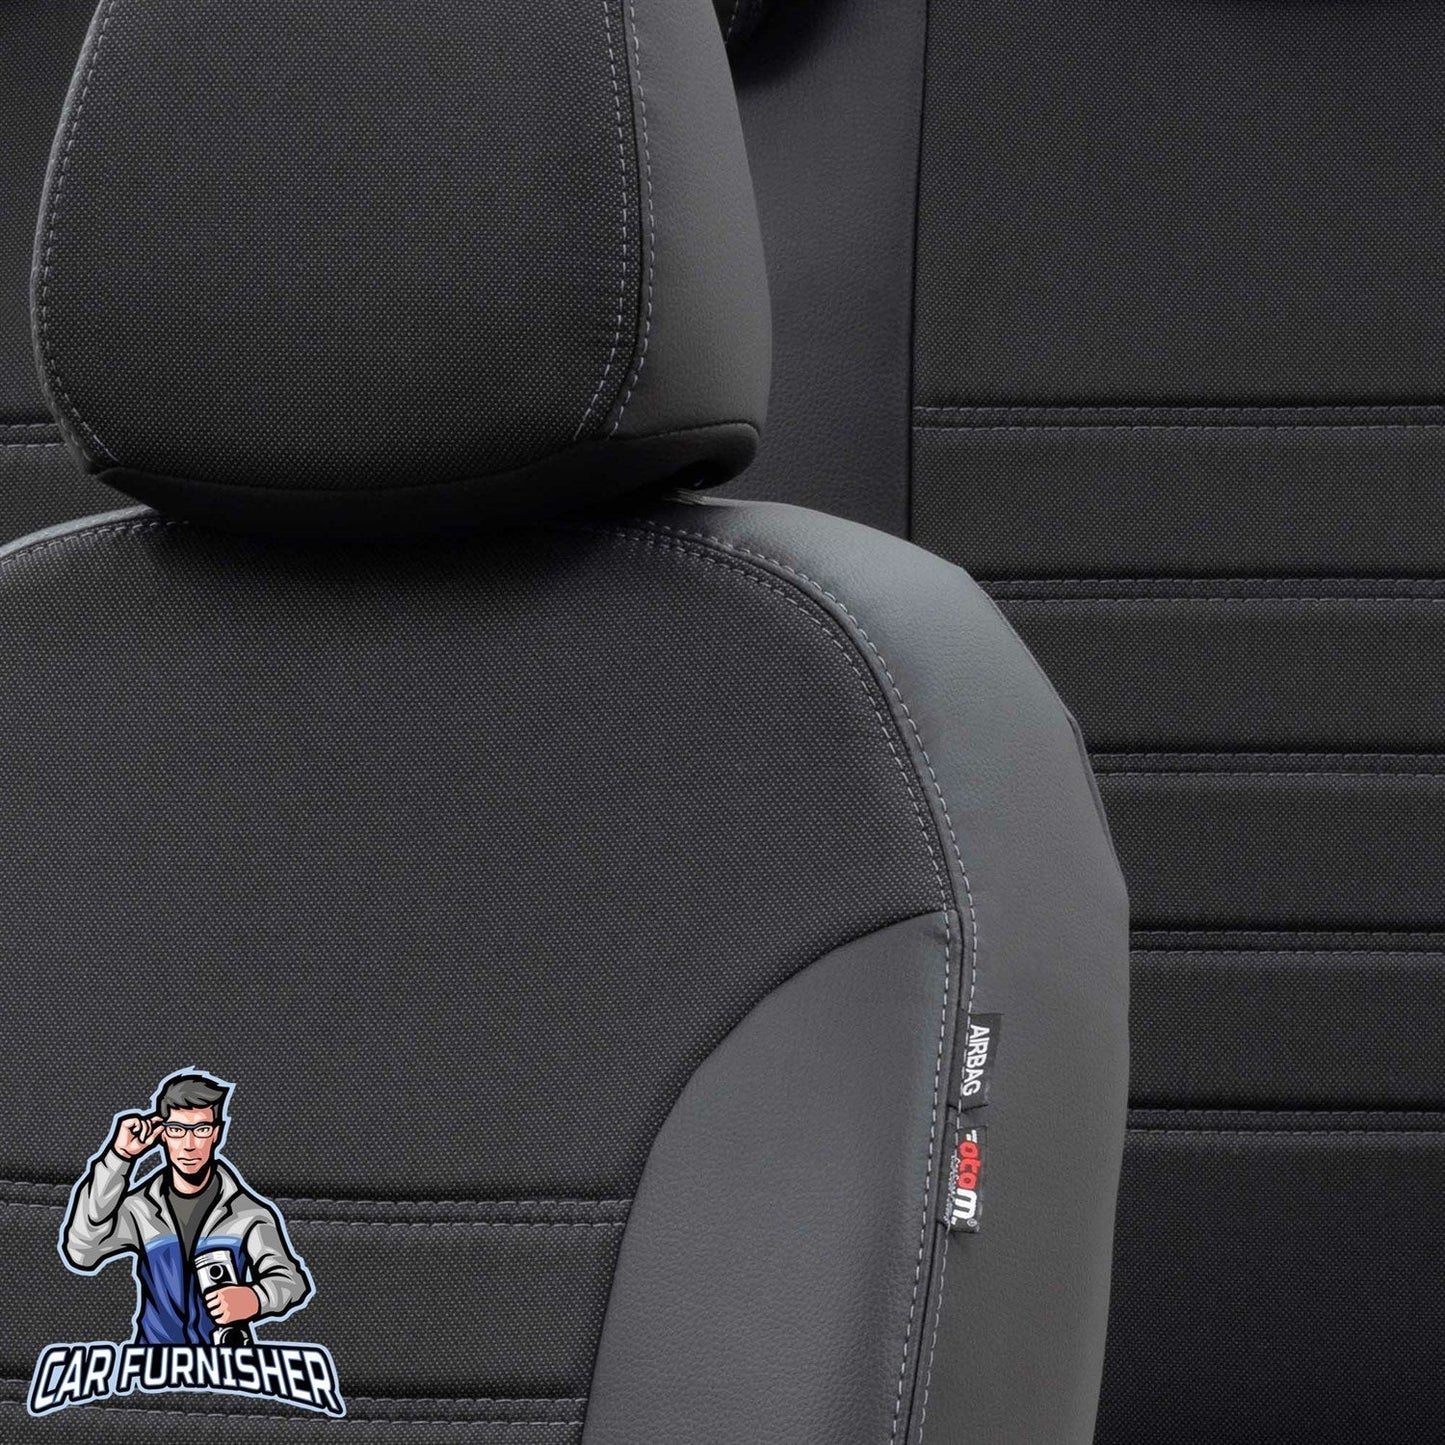 Seat Cordoba Seat Covers Paris Leather & Jacquard Design Black Leather & Jacquard Fabric